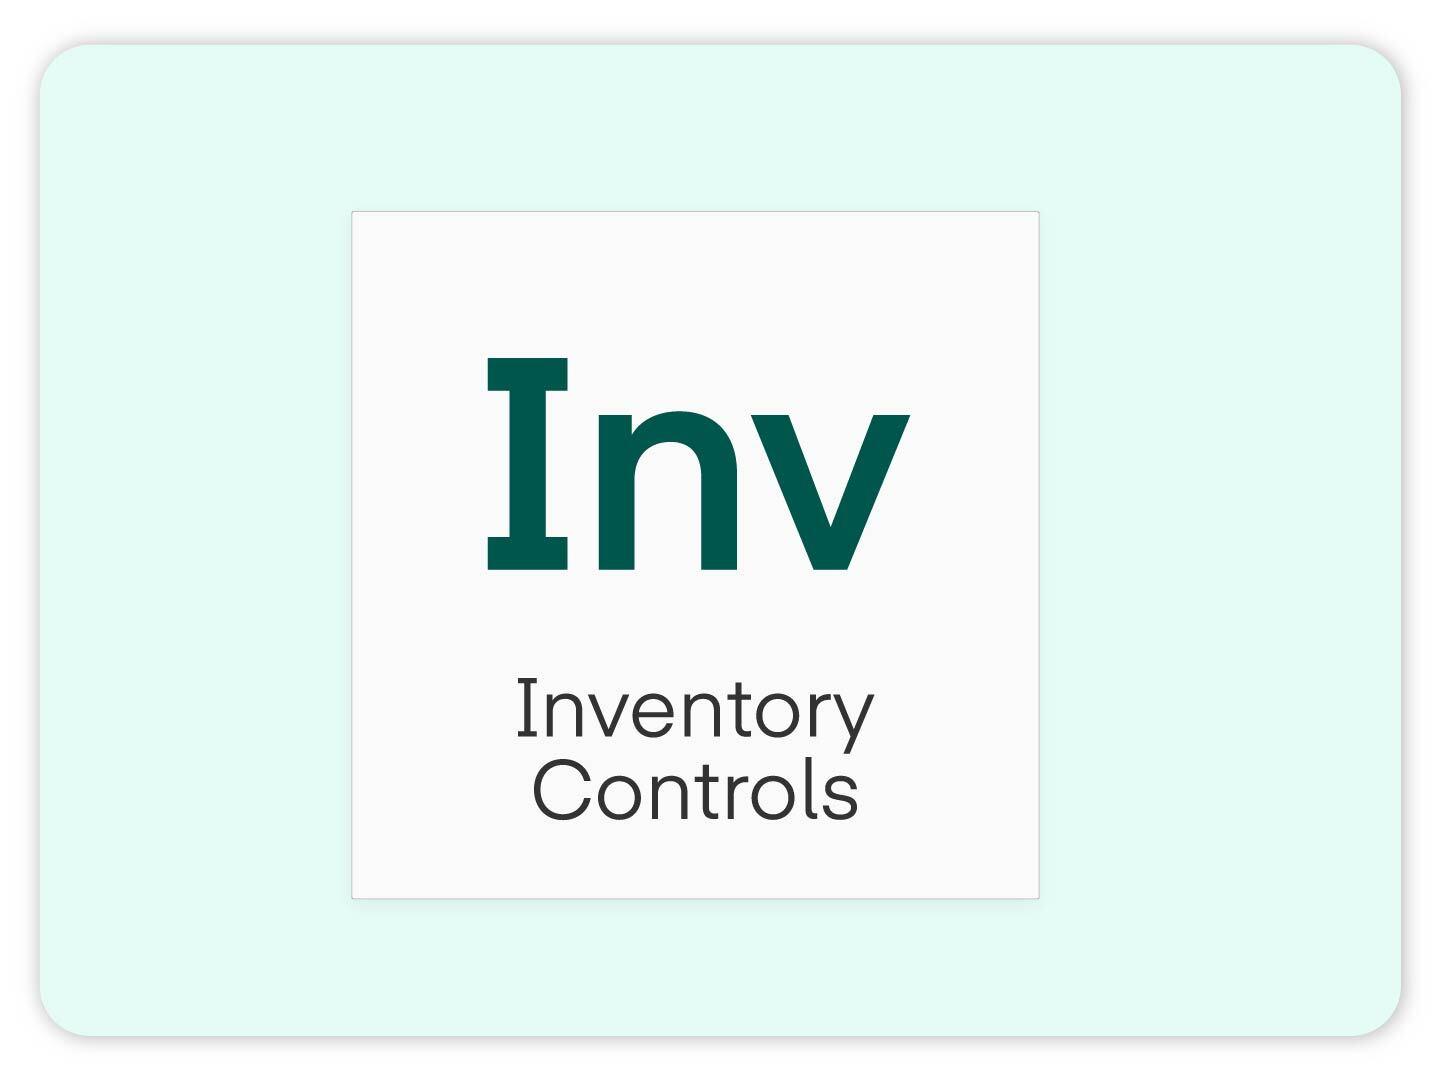 Inv - Inventory Controls